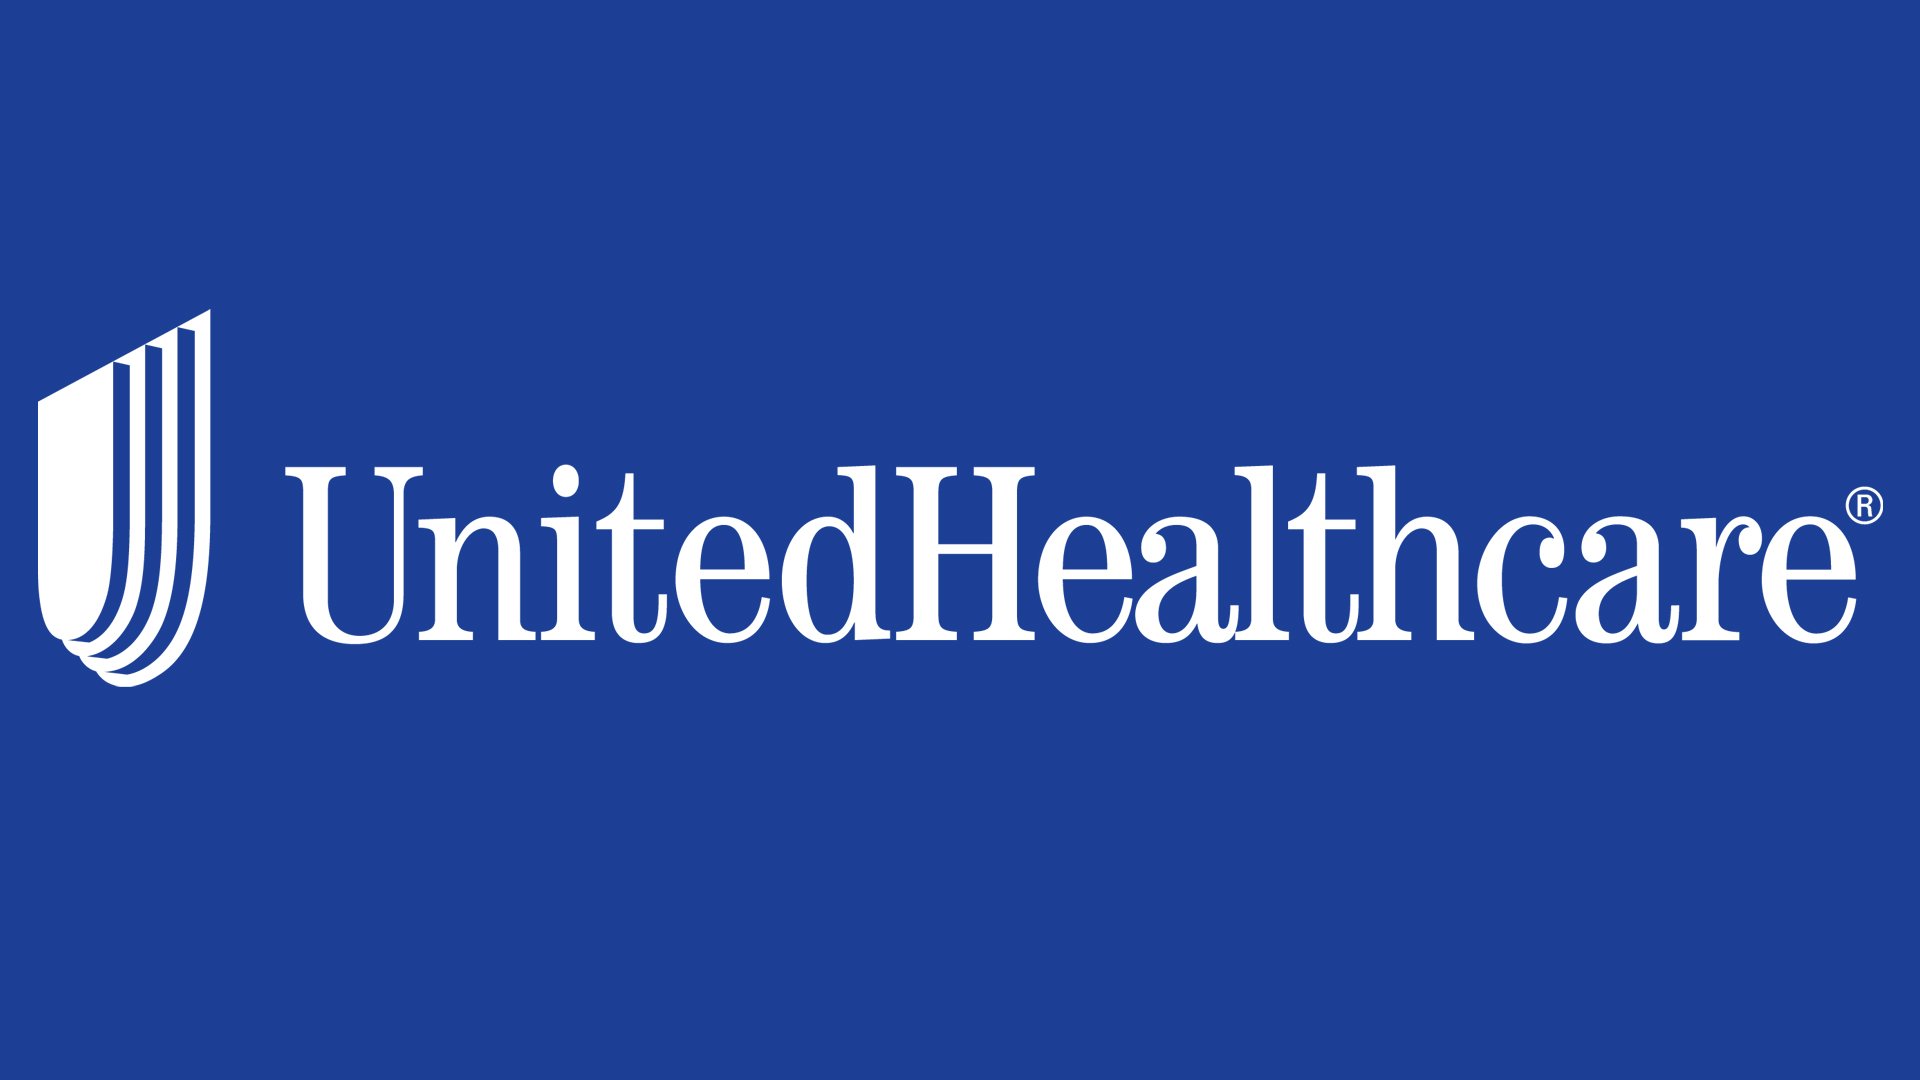 Image result for united healthcare logo